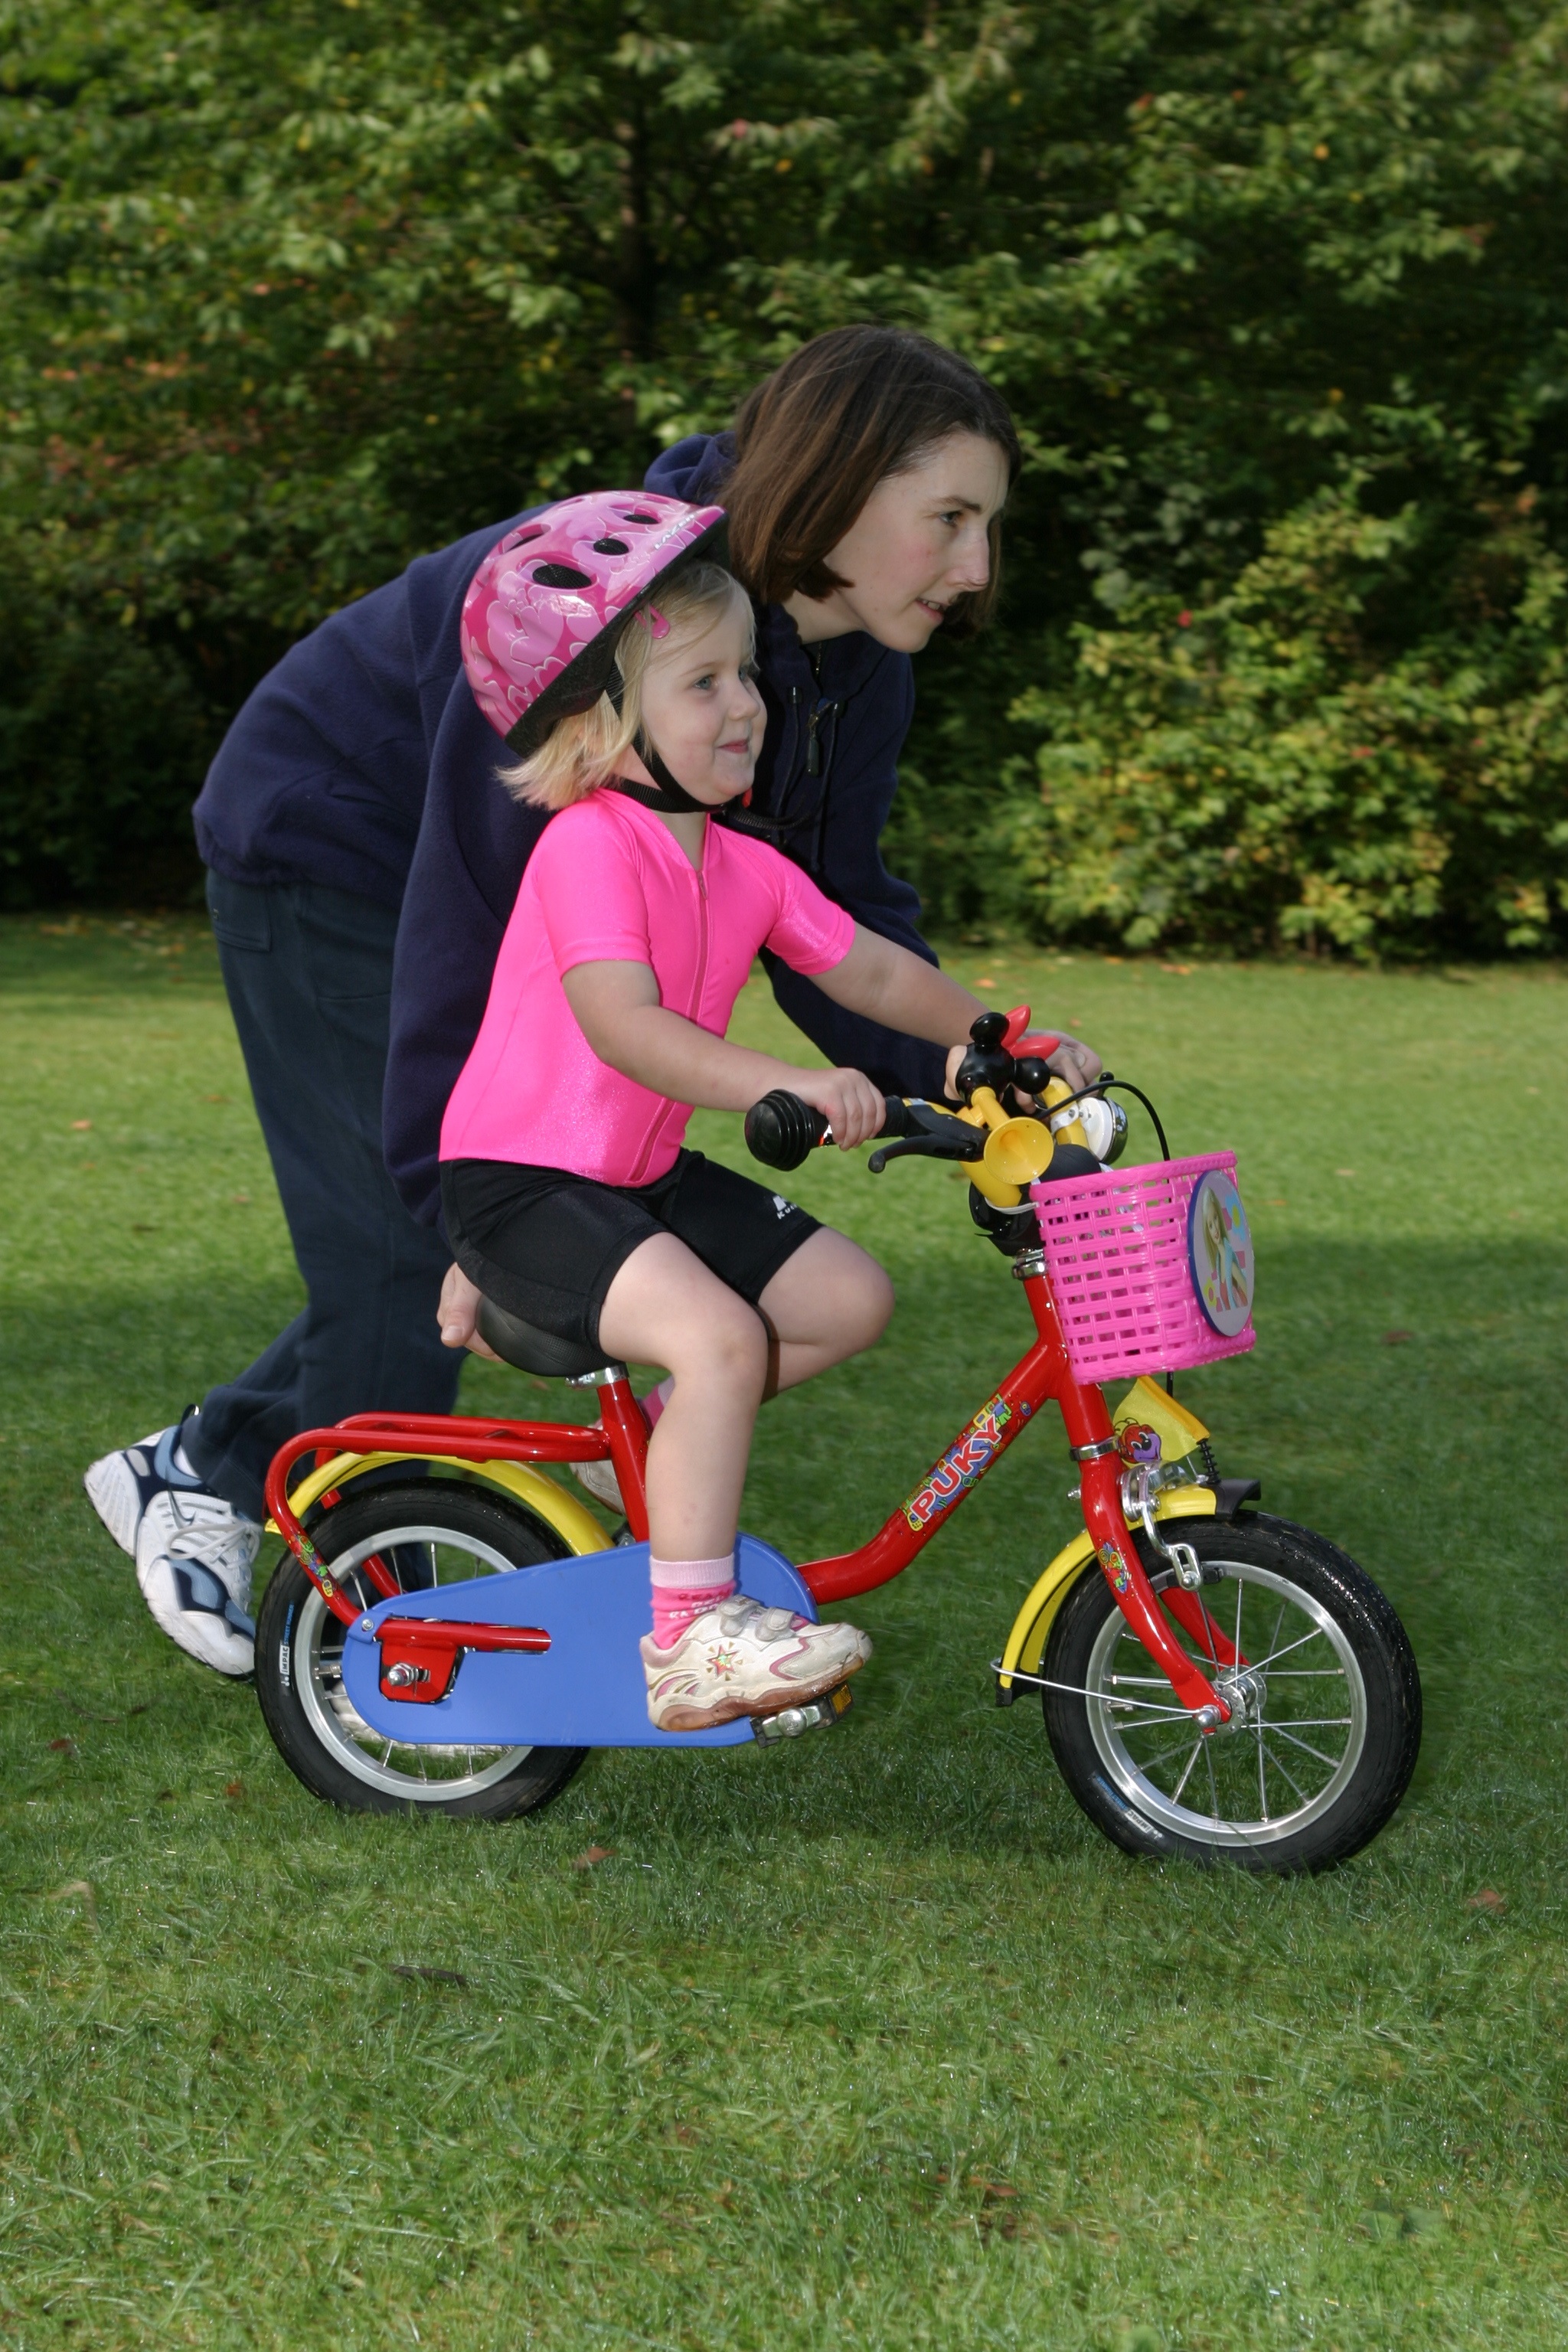 Teaching your child to ride a bike - BIKE HUB - http://www.bikehub.co.uk